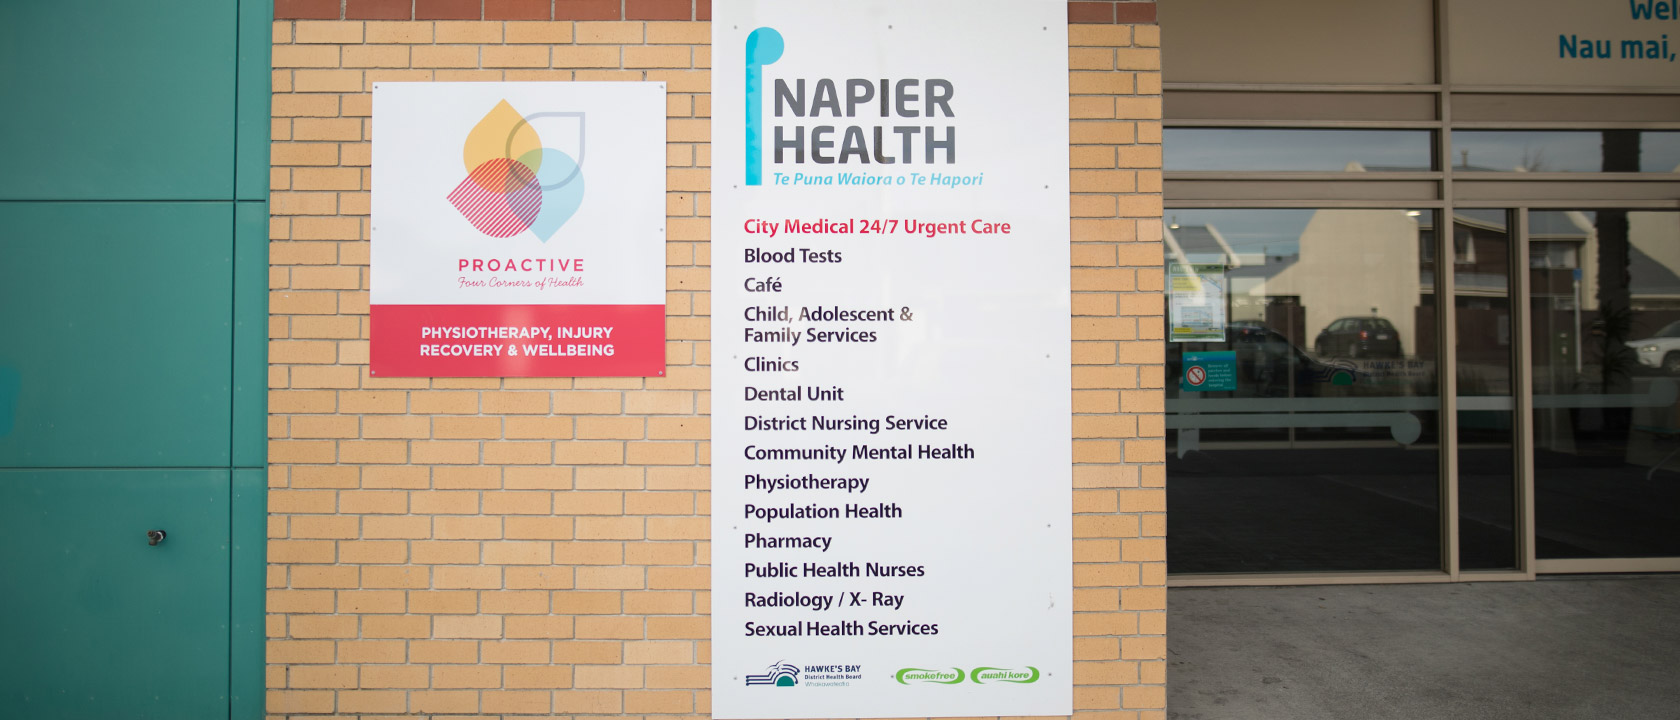 Hawke's Bay District Health Board | Band